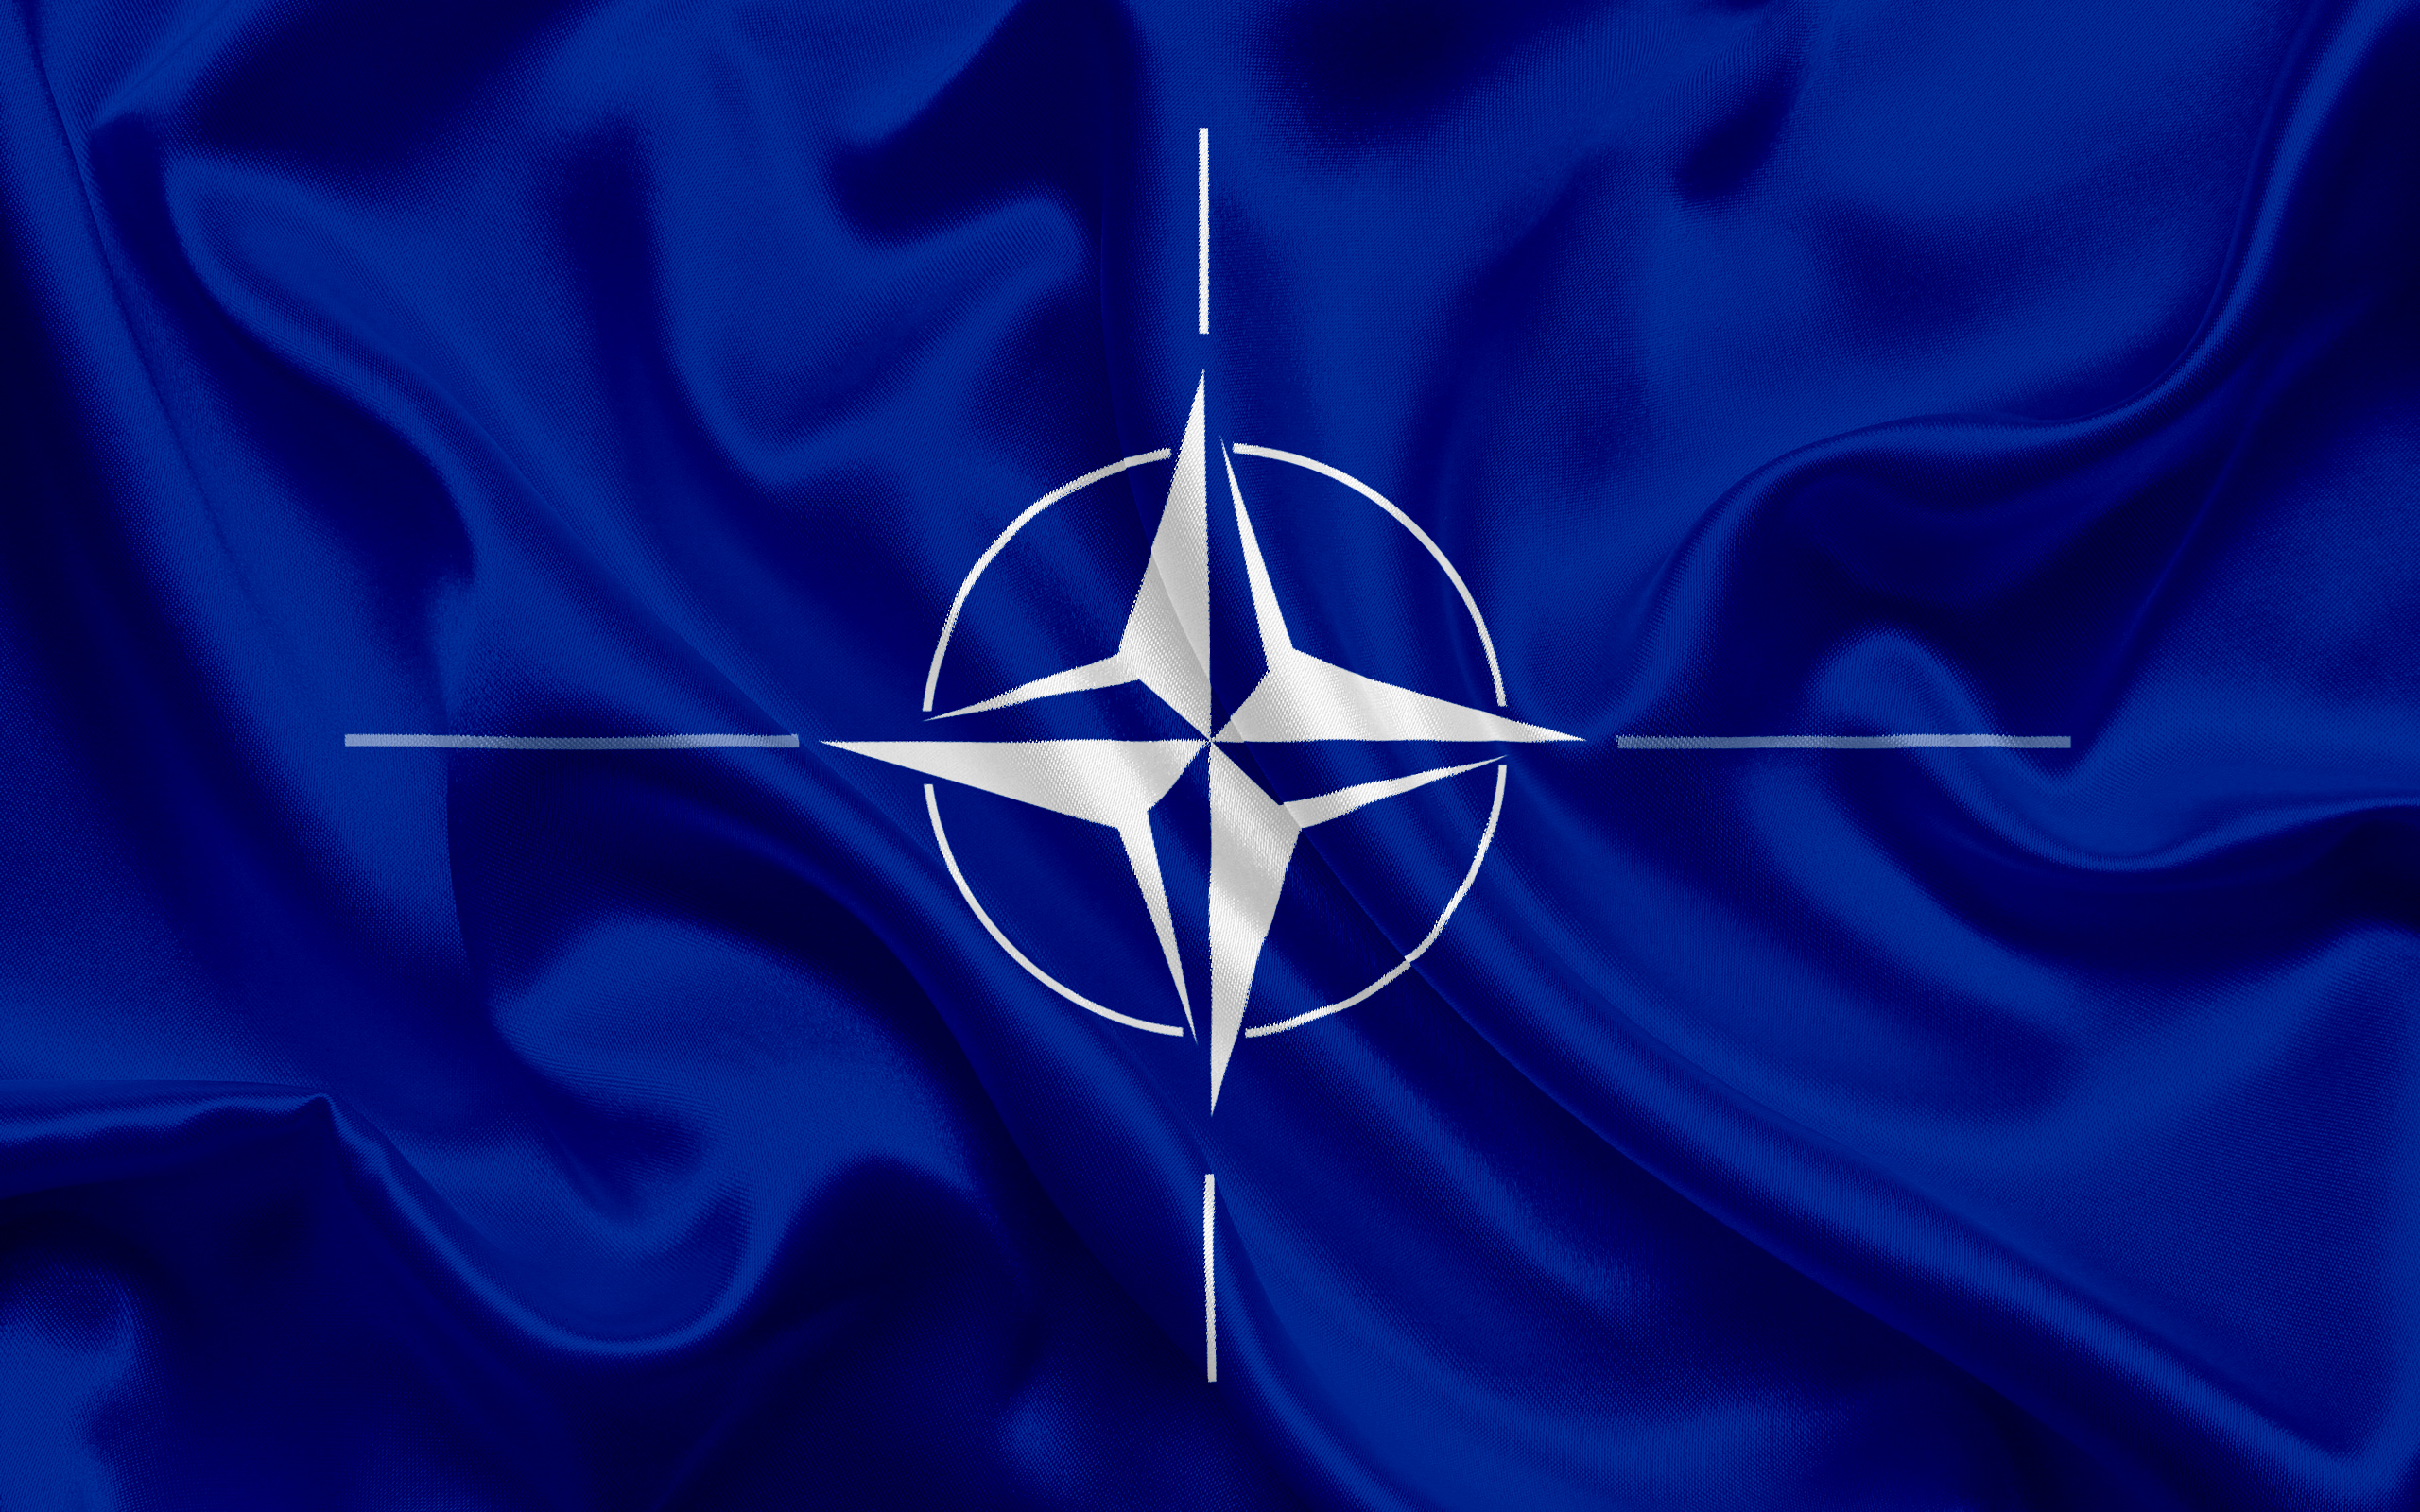 Download wallpaper flag of NATO, blue silk flag, NATO symbols, international organization, North Atlantic Treaty Organization, NATO for desktop with resolution 2560x1600. High Quality HD picture wallpaper